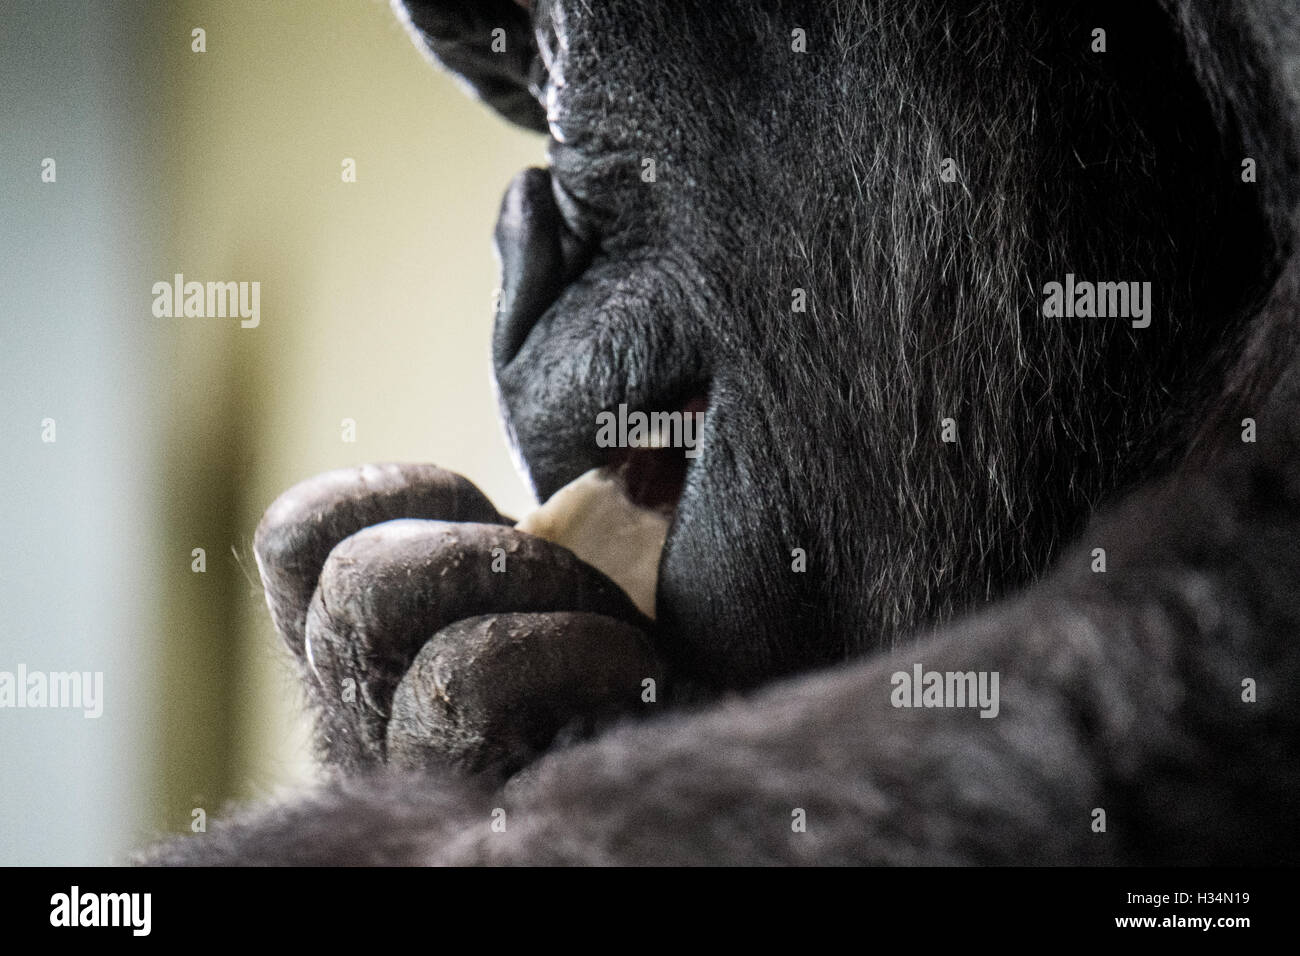 Gorilla in profile eating something Stock Photo